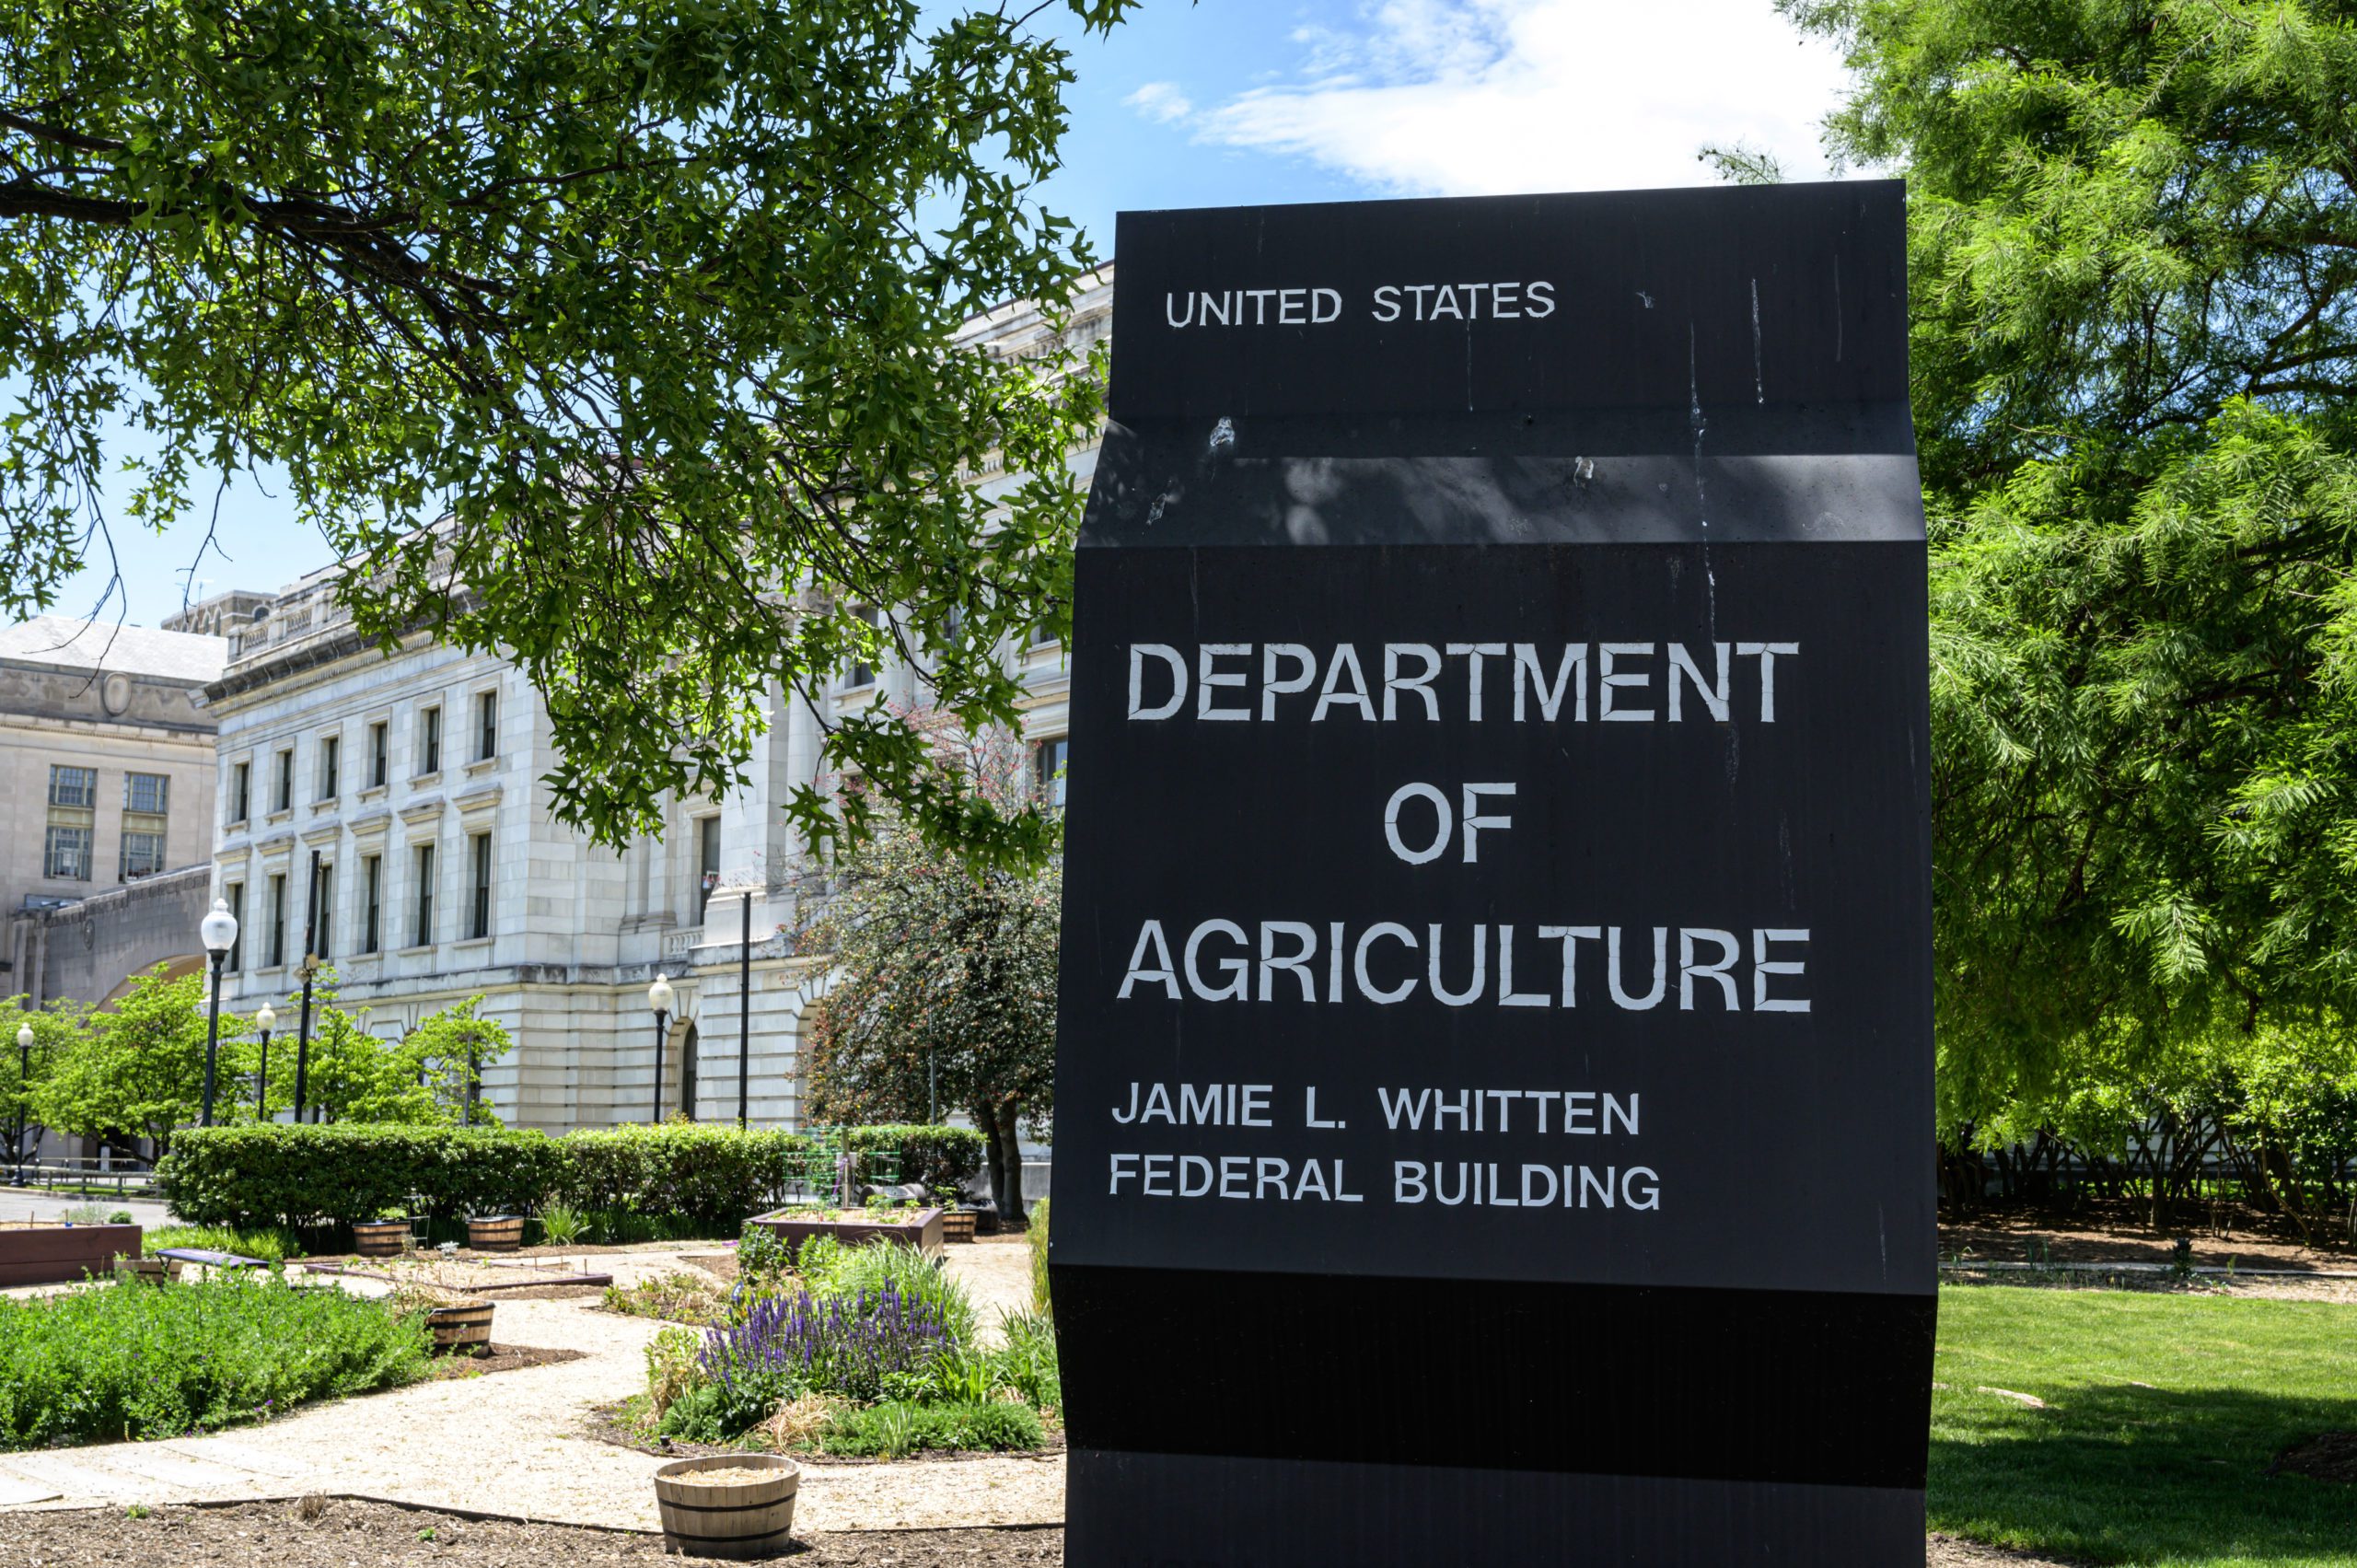 USDA Announces New Regulations for Salmonella